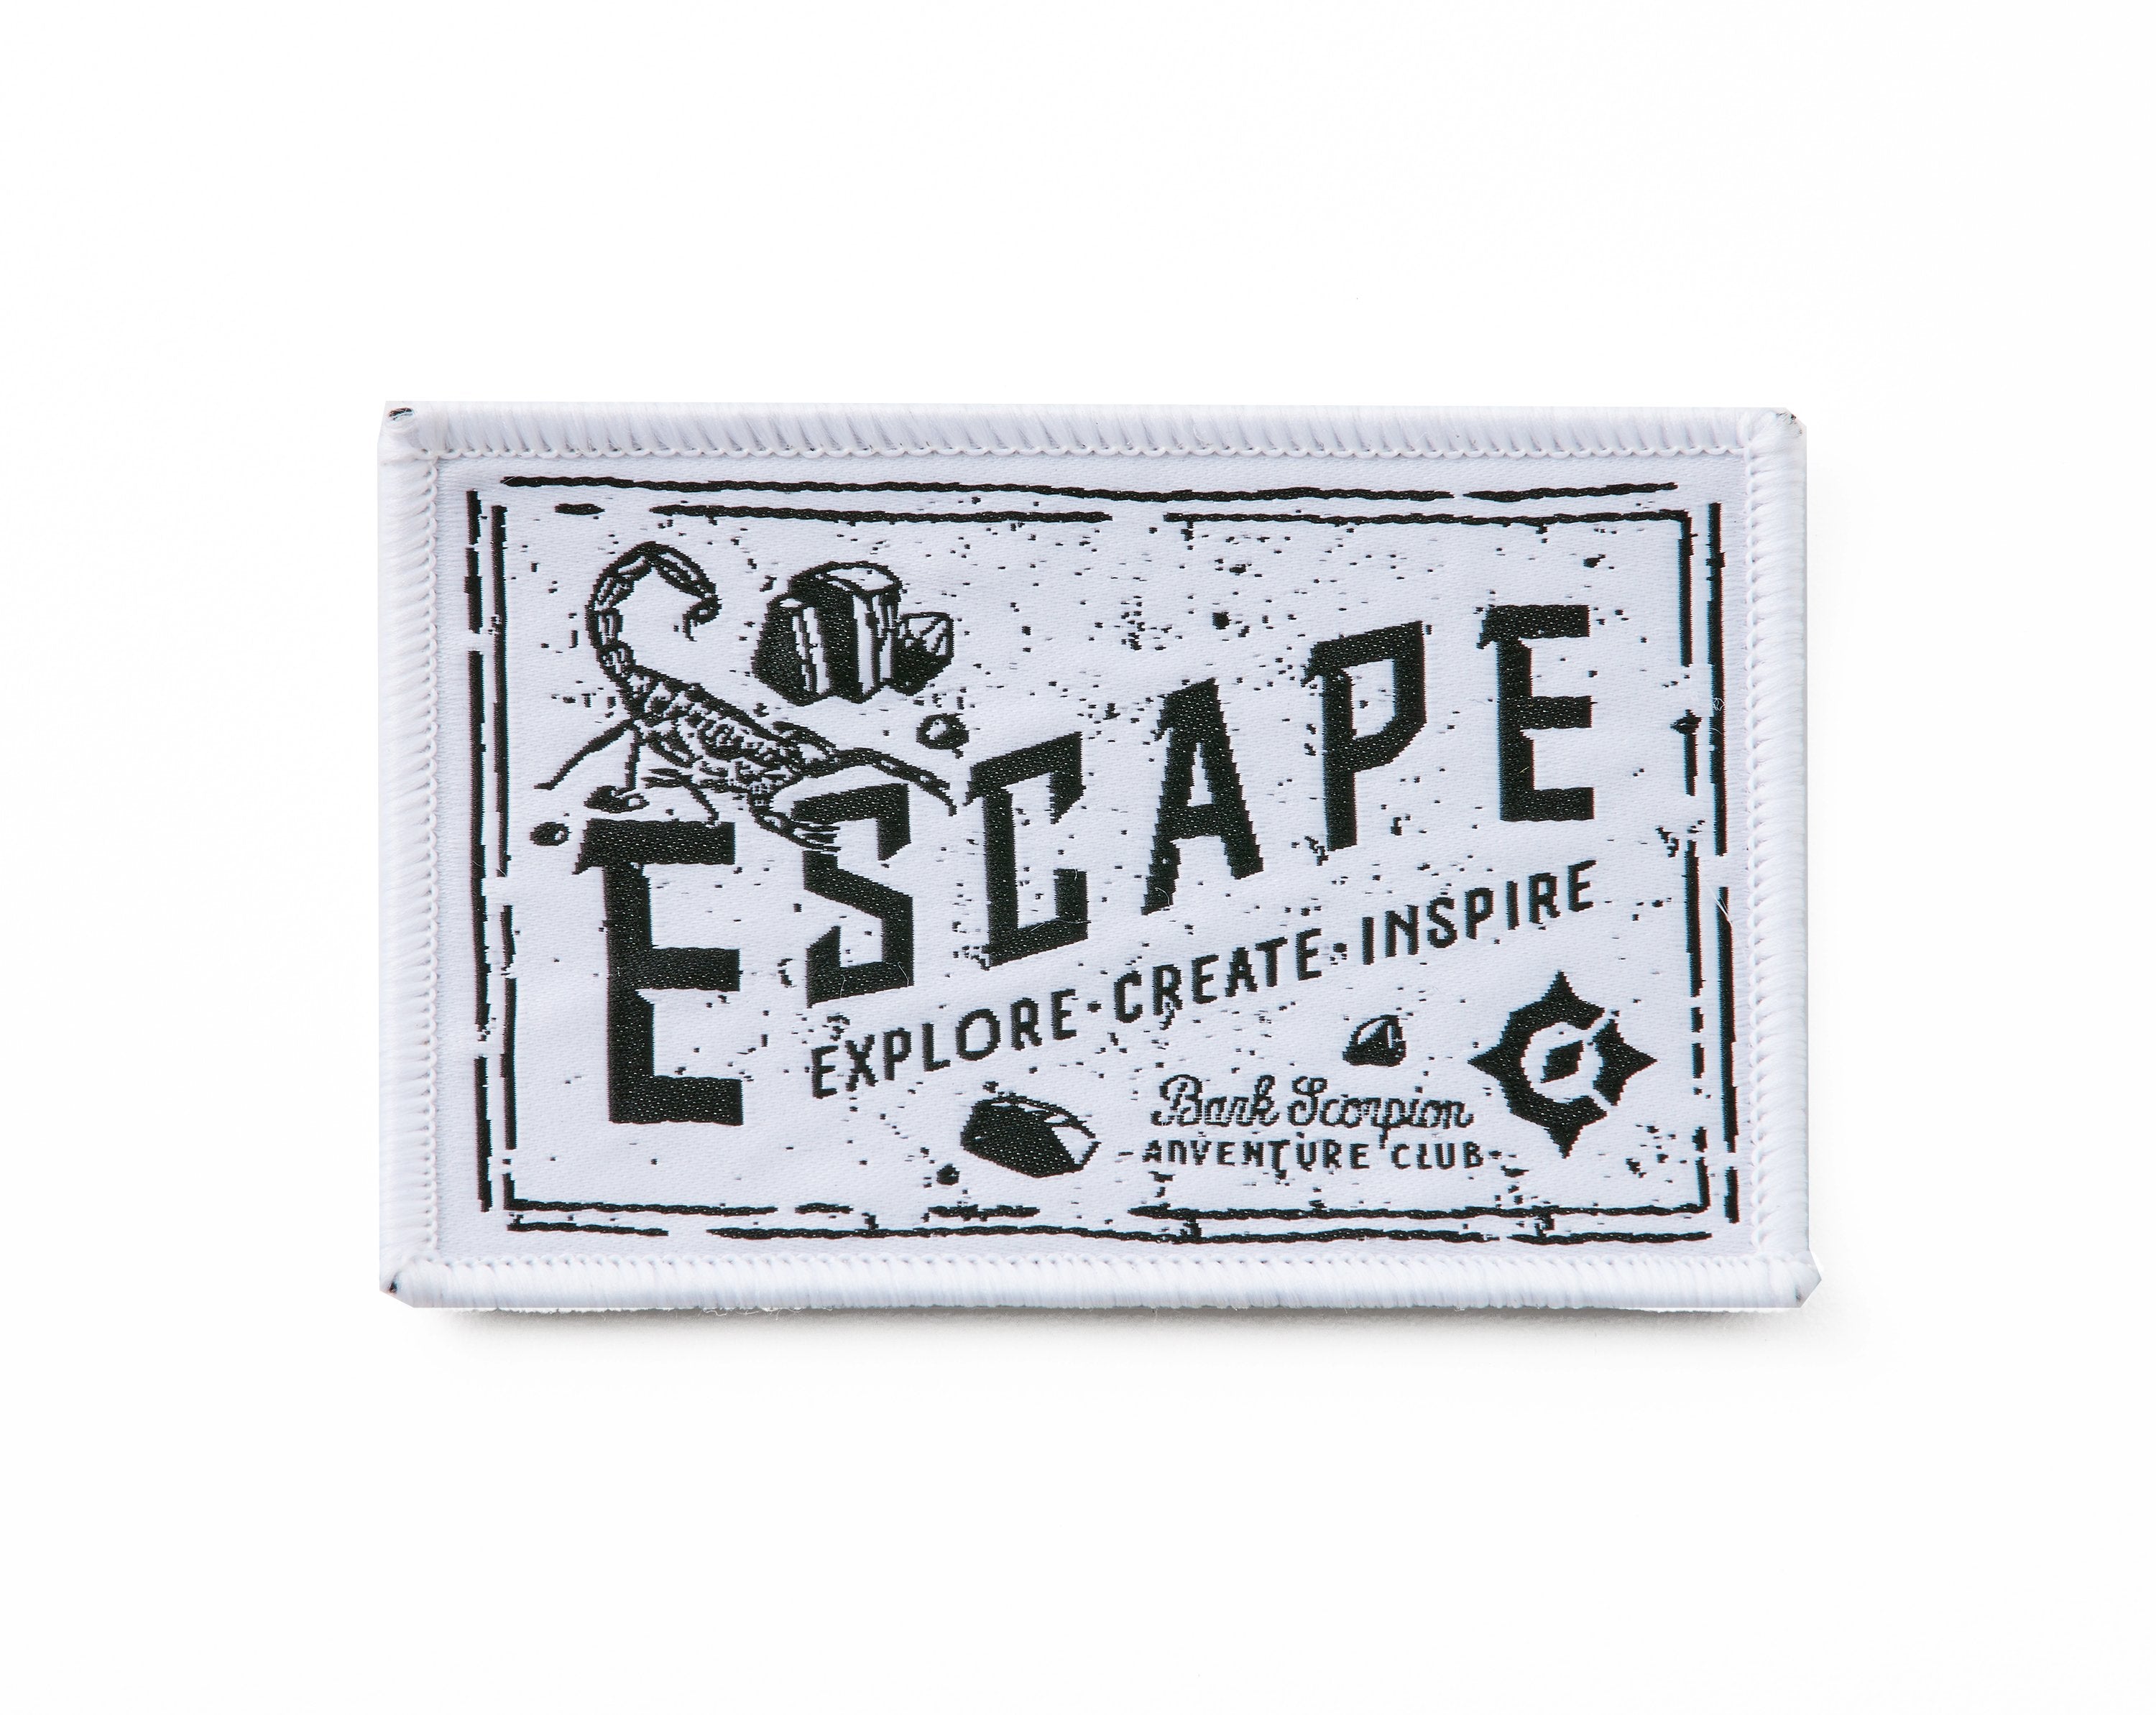 VELCRO Patch Escape Explore, Create, Inspire